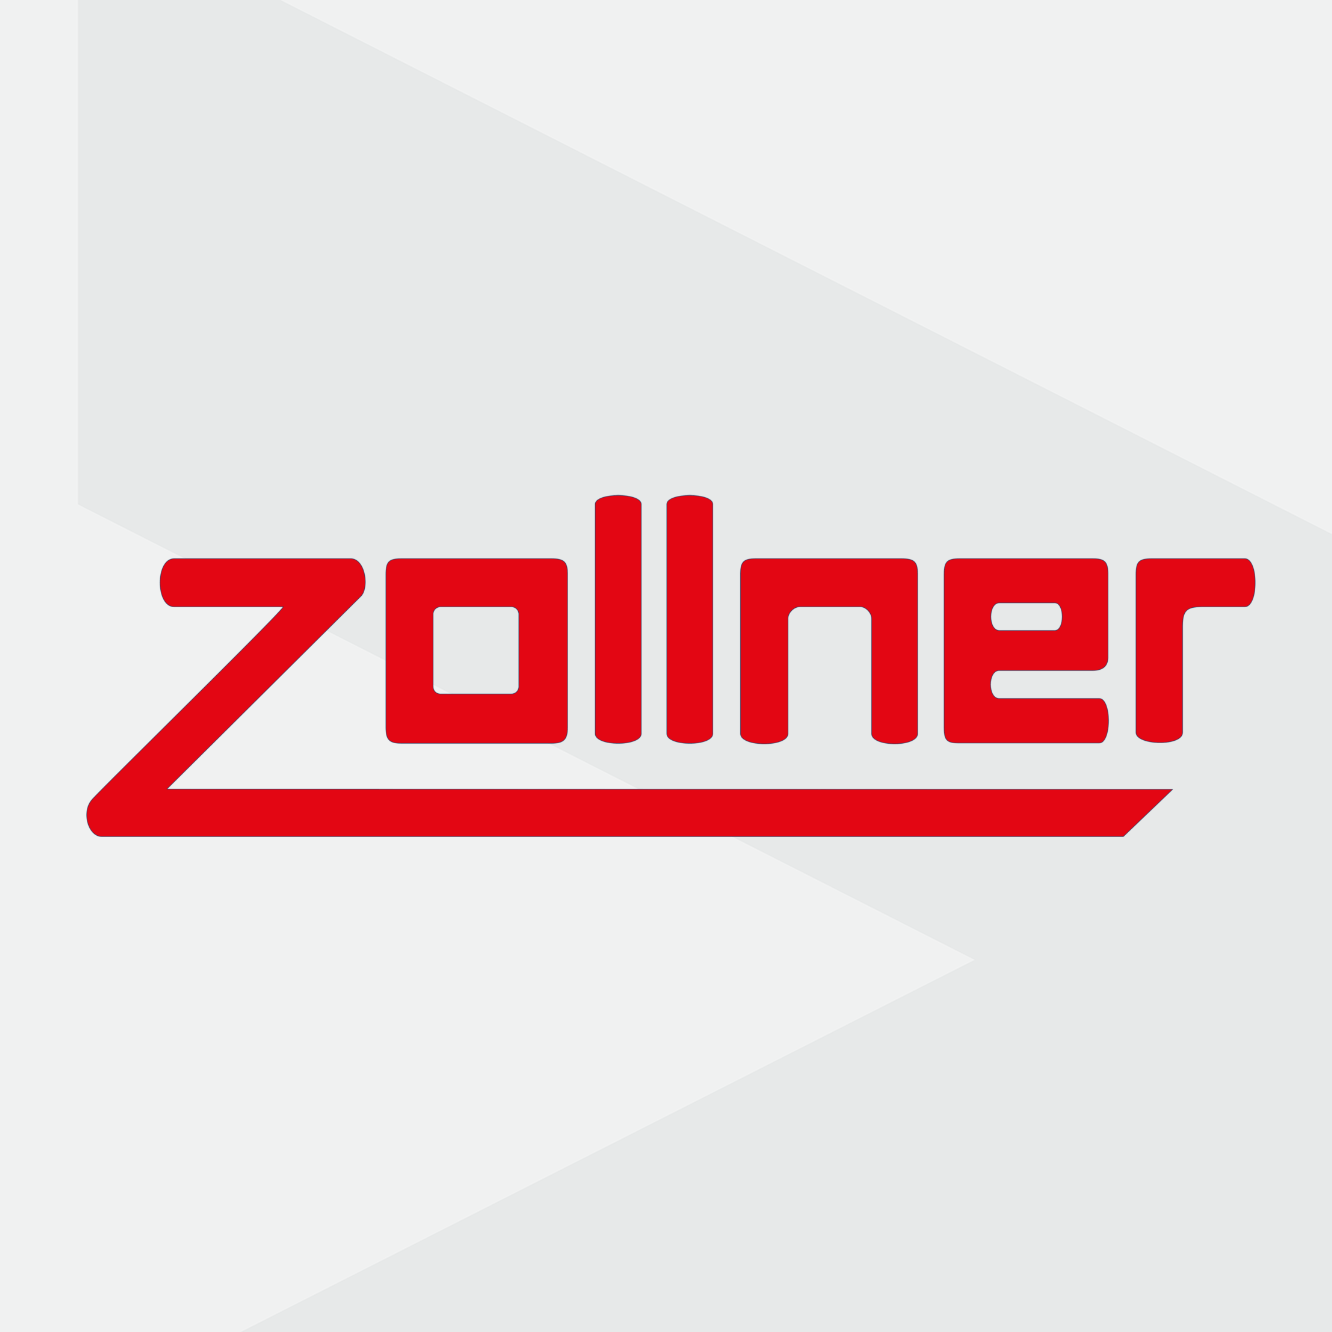 Zollner case study